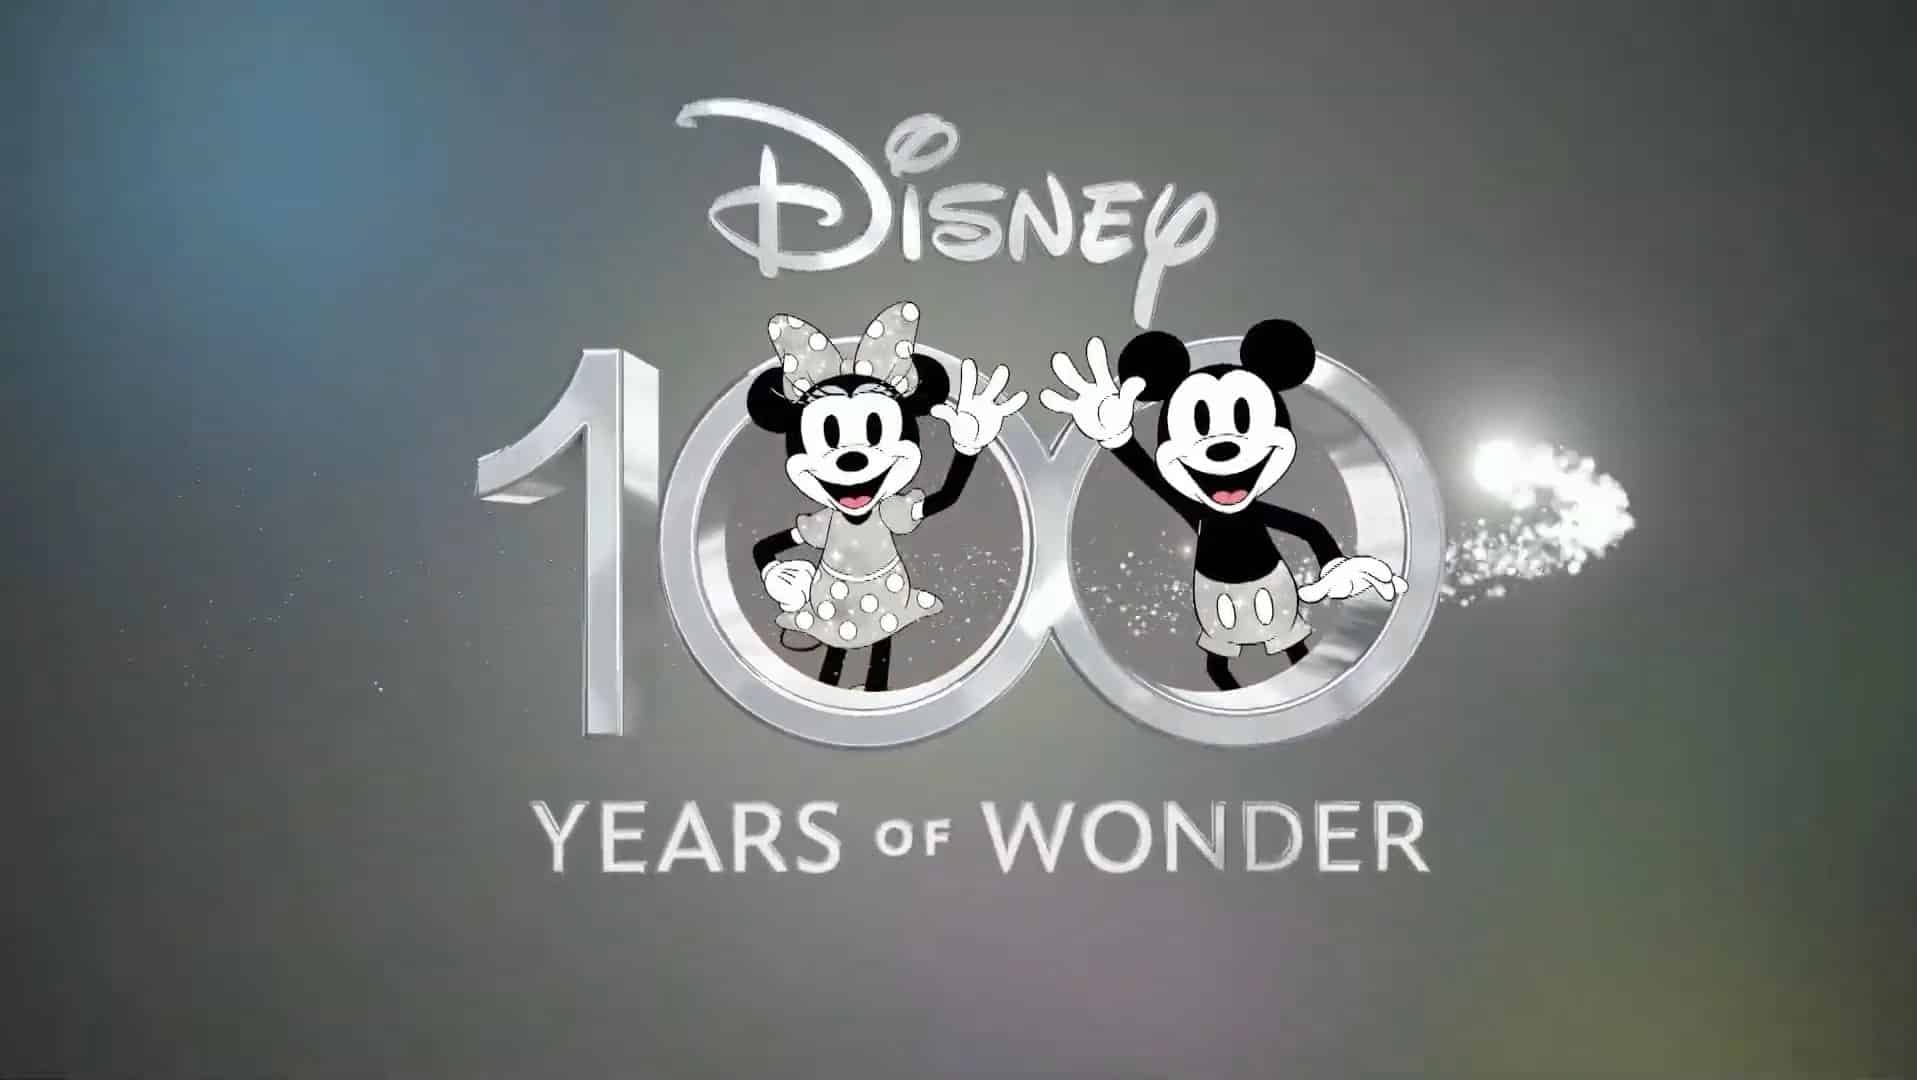 Disney100 Decades 2000s Collection - Enchanted, Emperor's New